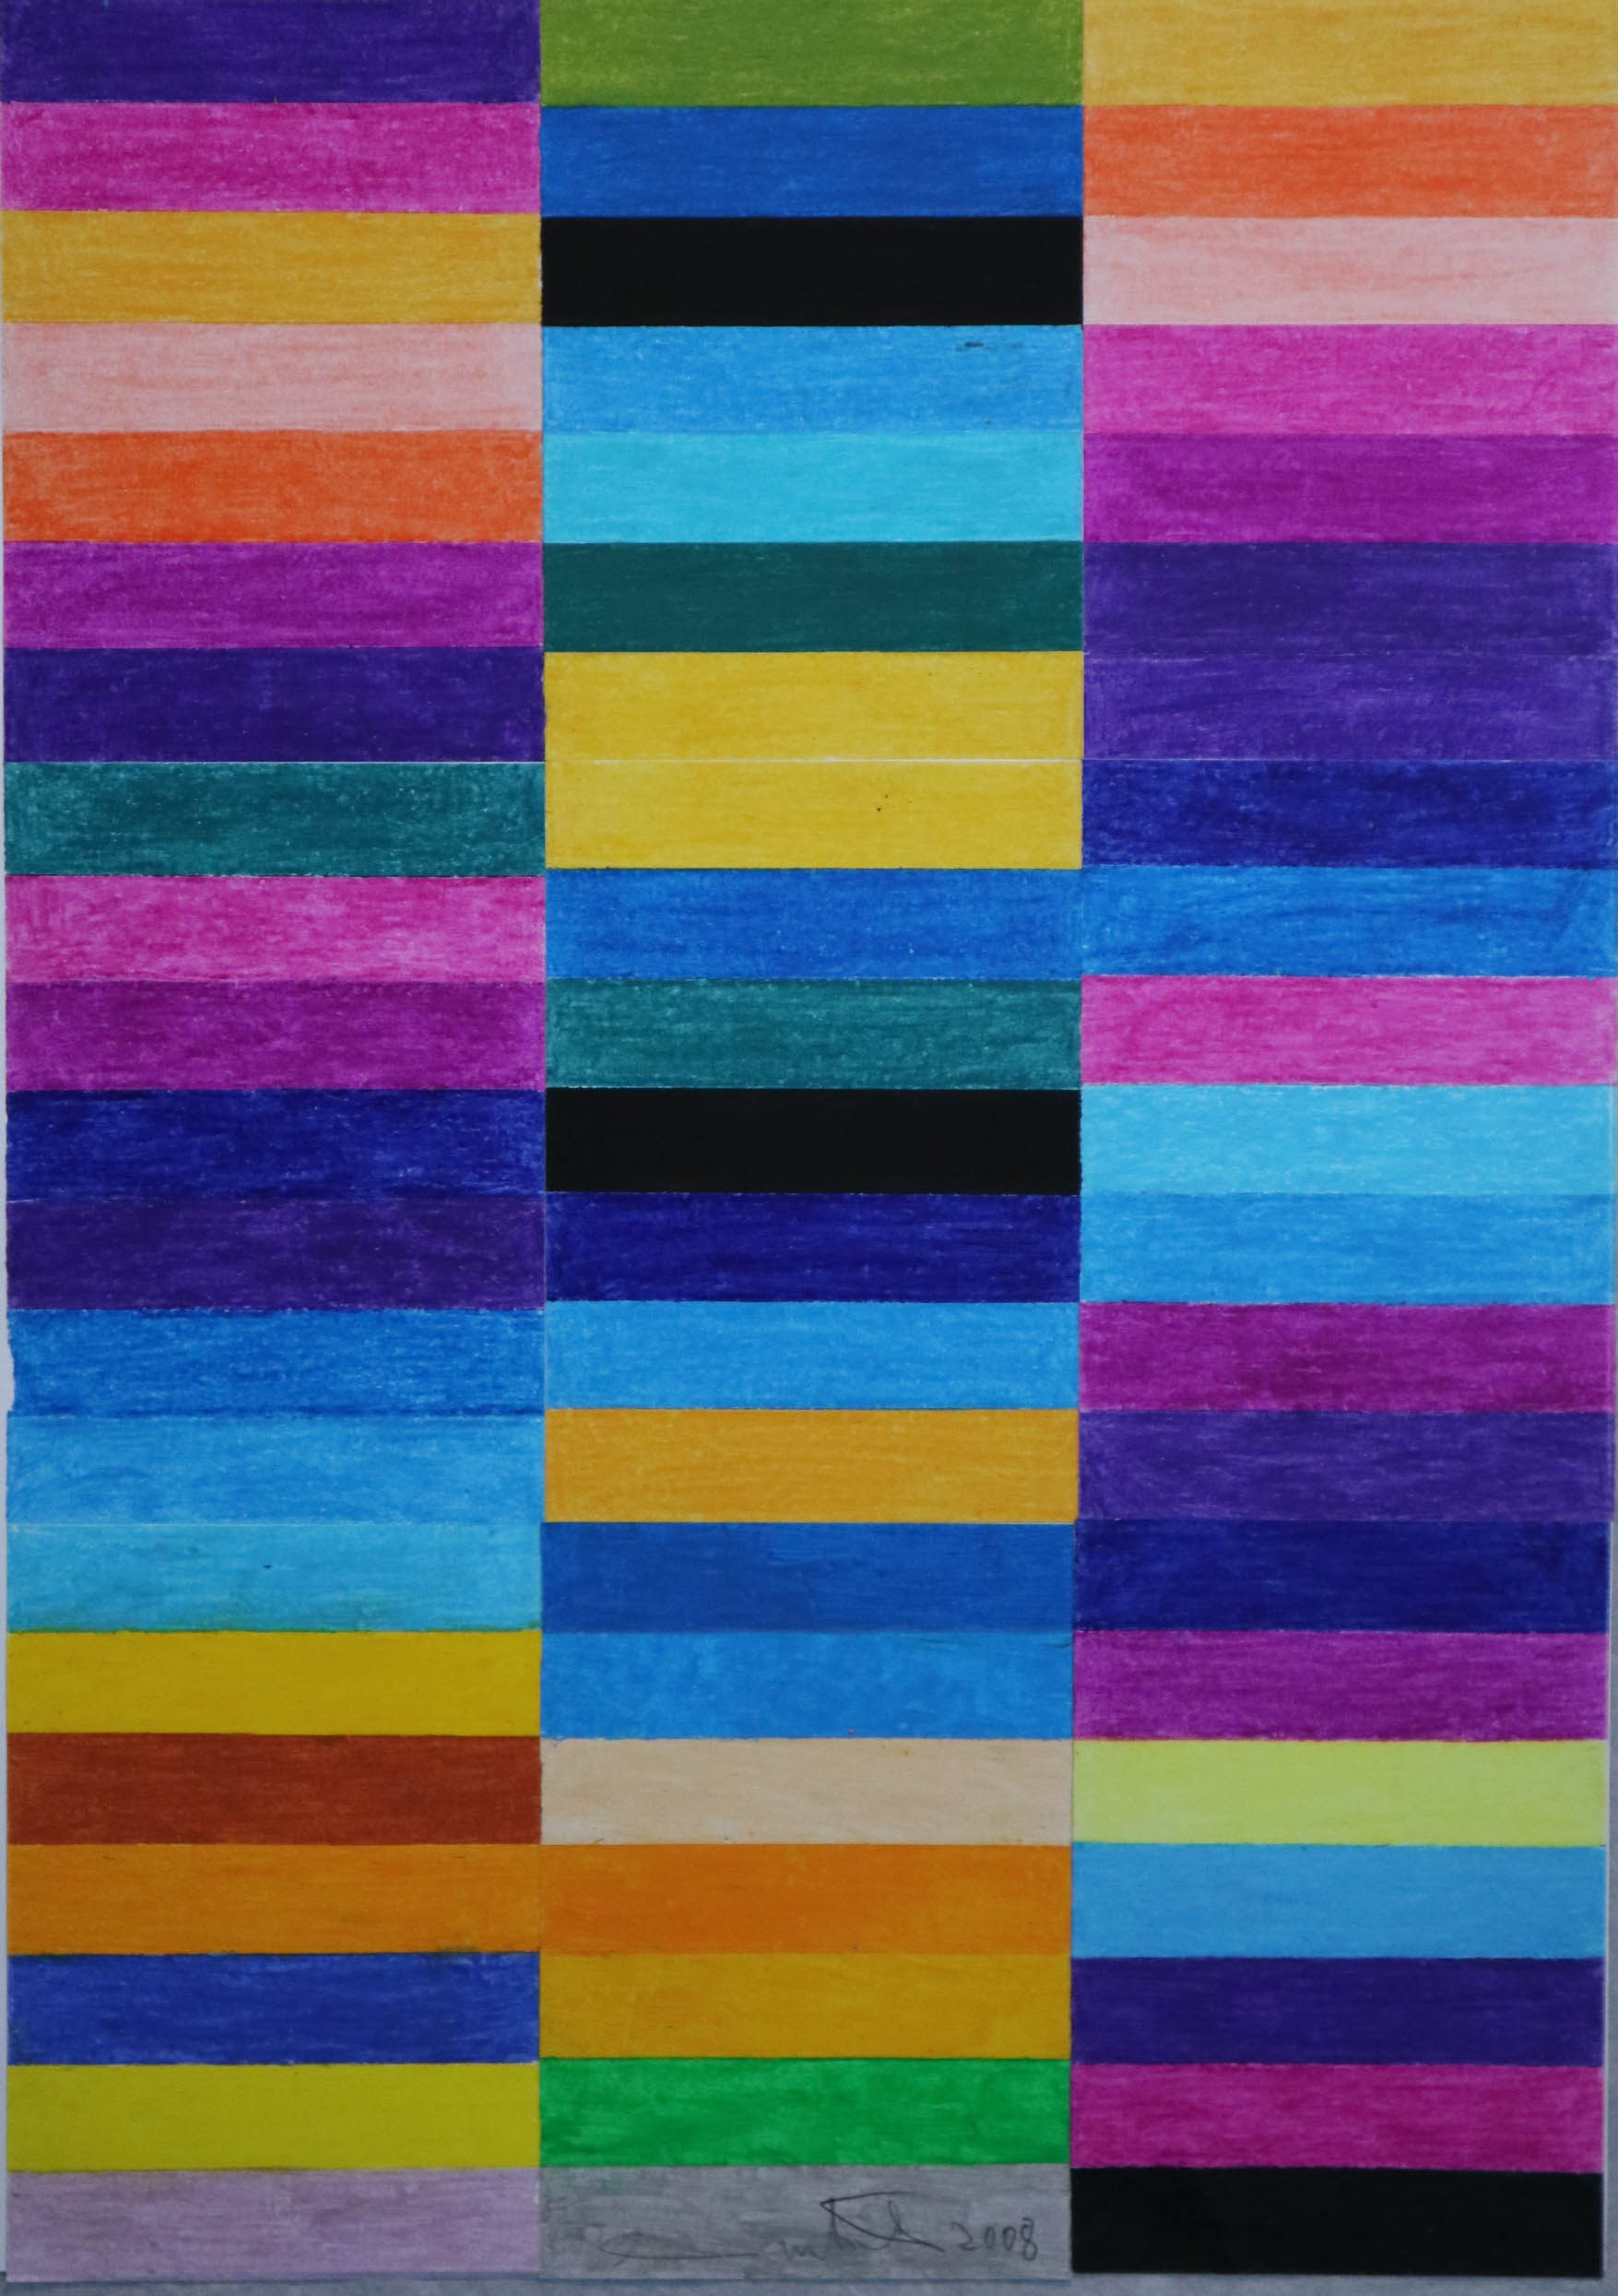 Teoria dei colori 7 (disegno) di Nitsch, Hermann - Fondazione Morra (sec. XXI)